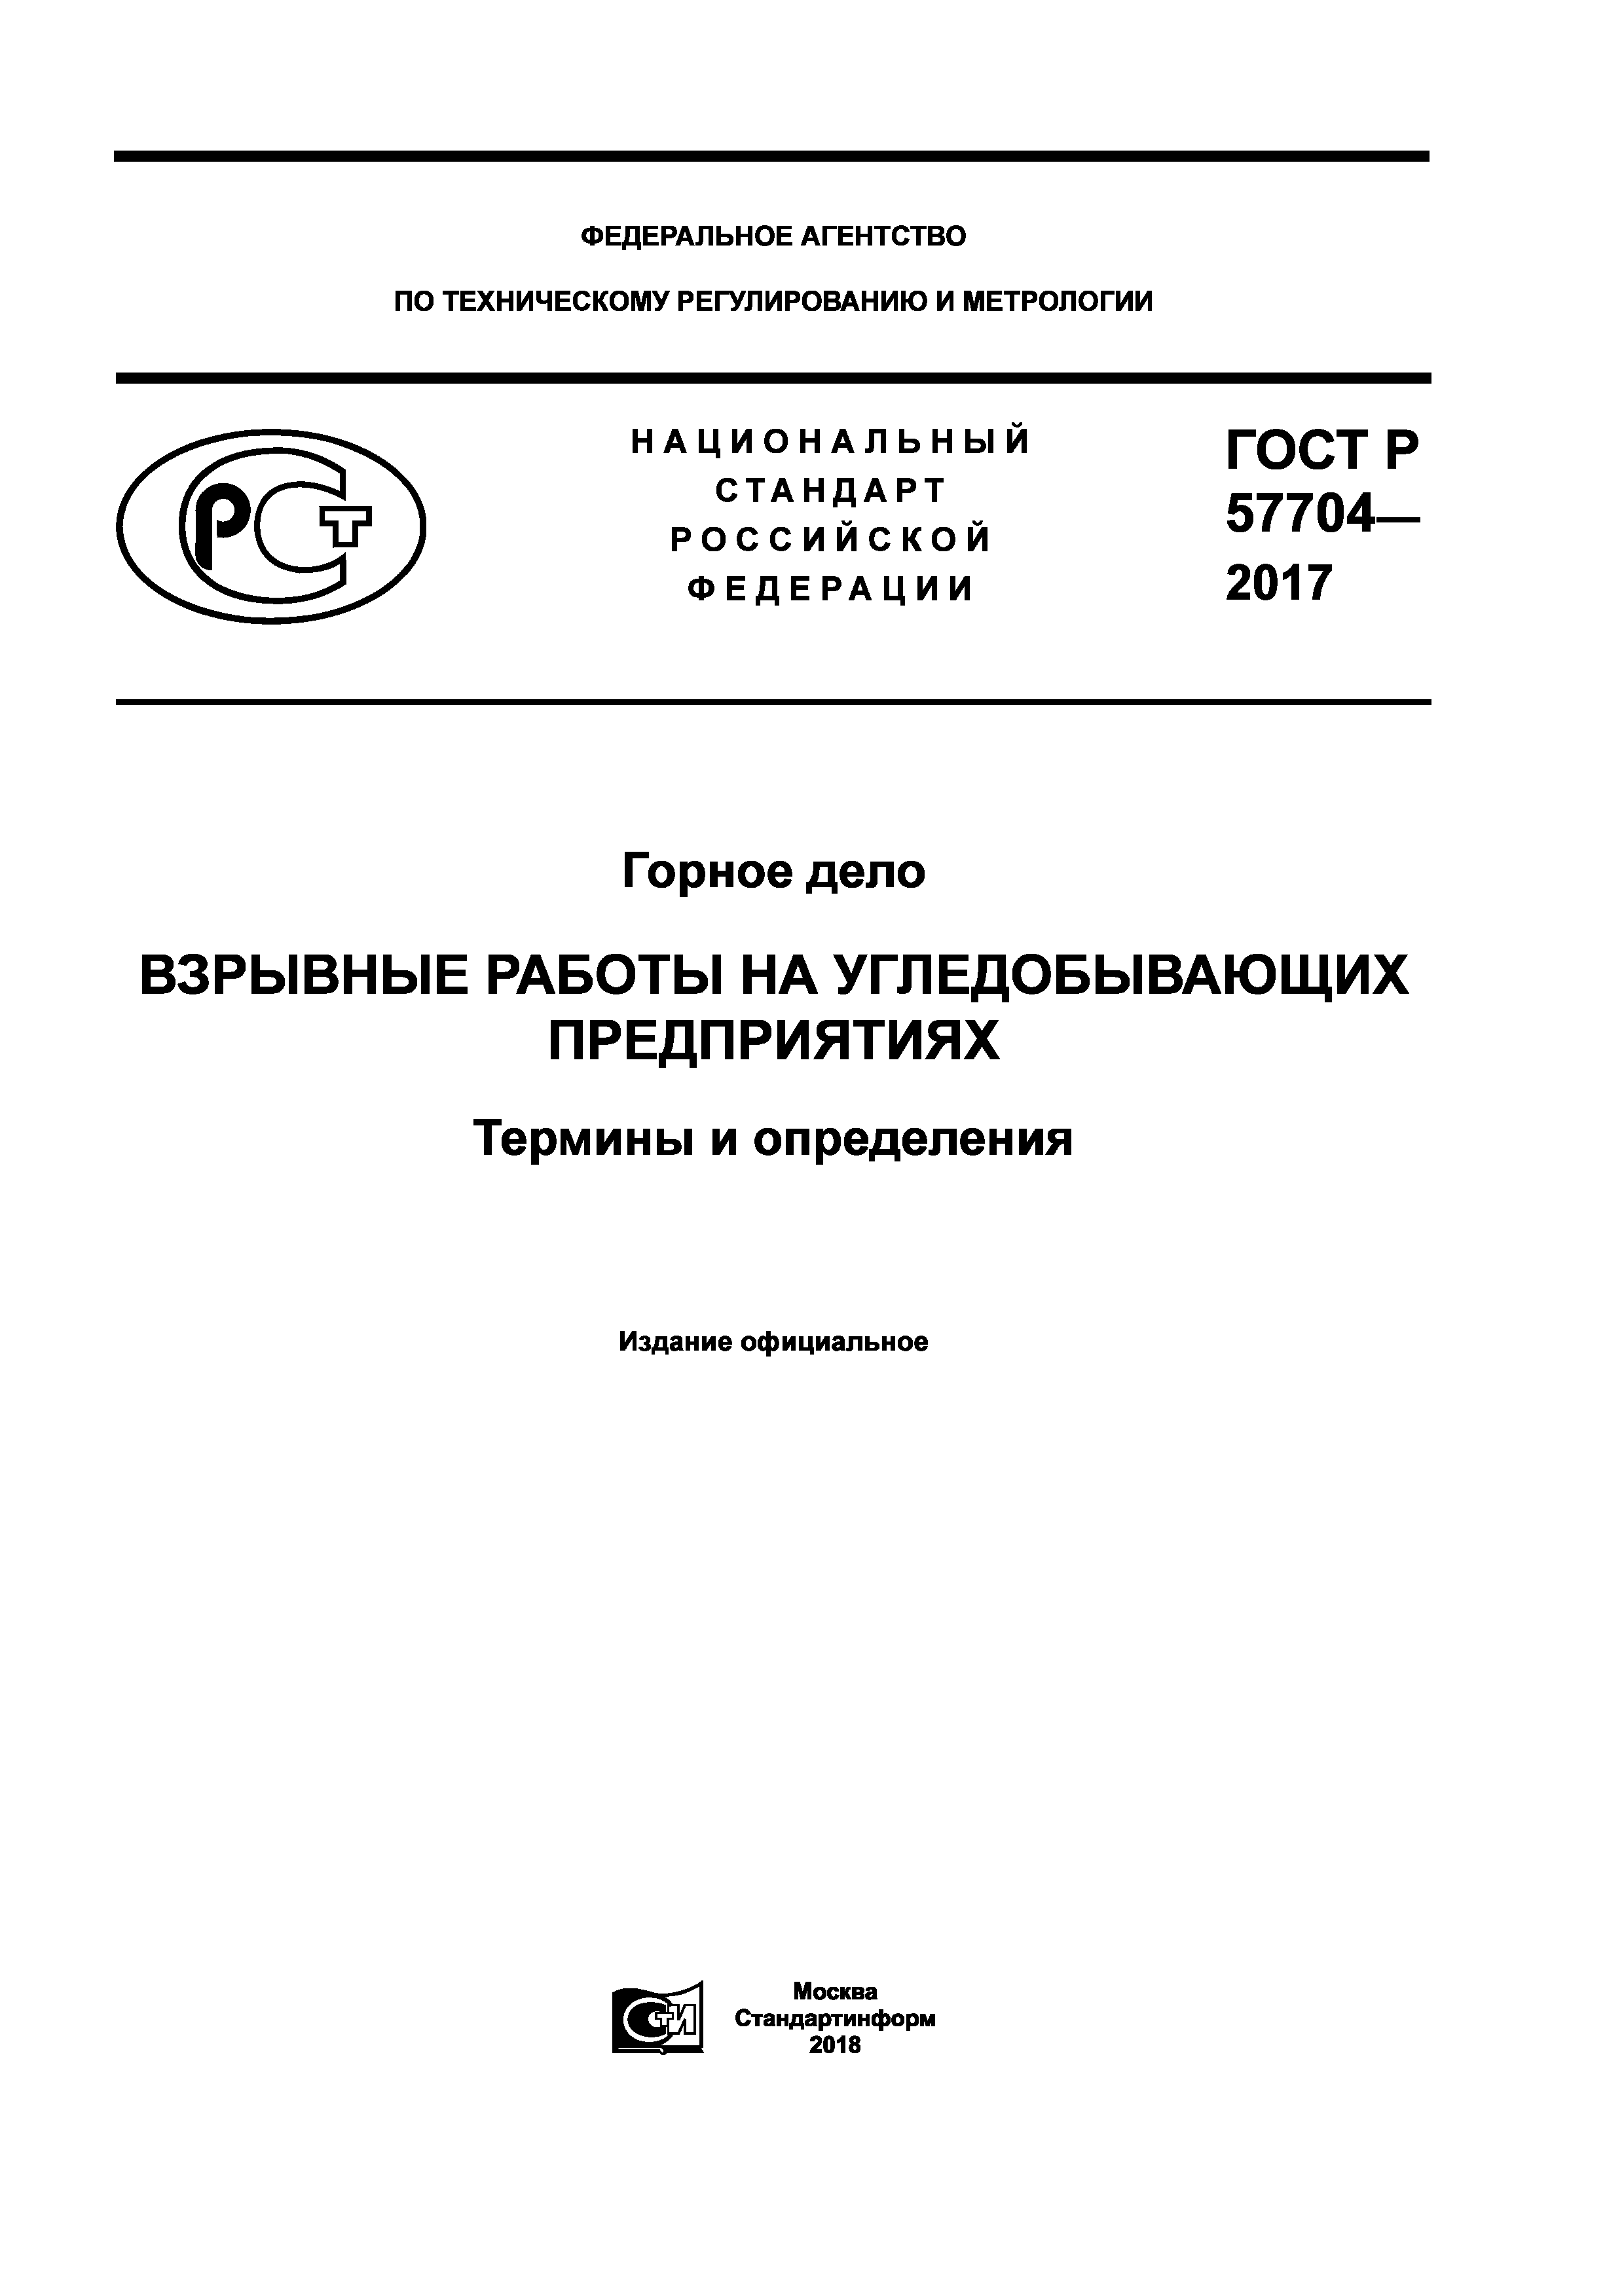 ГОСТ Р 57704-2017